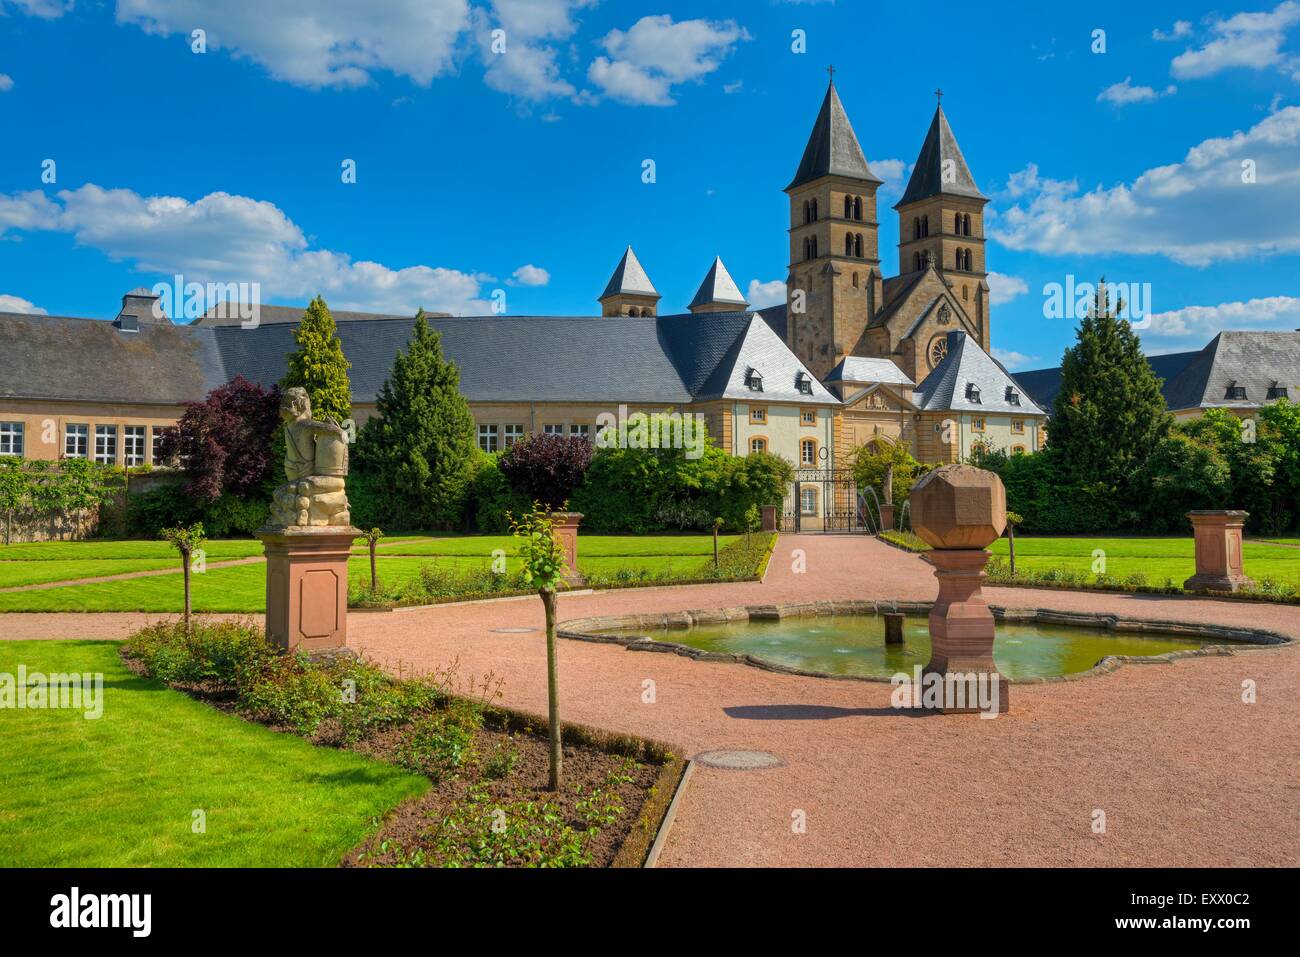 St.-Willibrord-Basilica, Echternach, Luxemburg, Europe Stock Photo